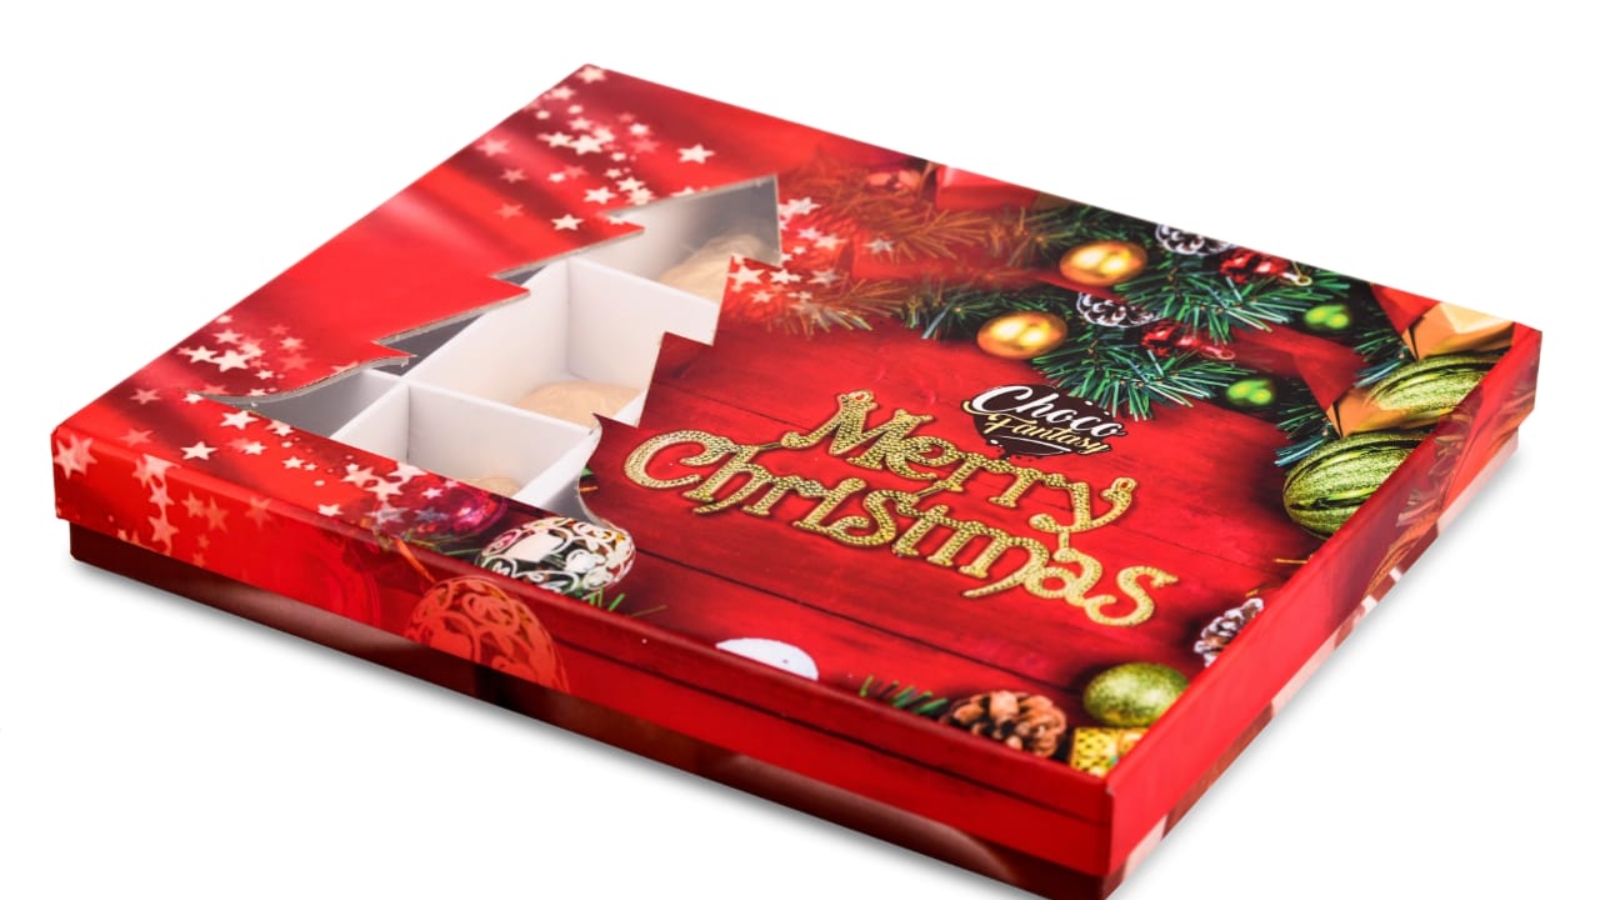 Family Fun Gift Box – The Chocolate Season